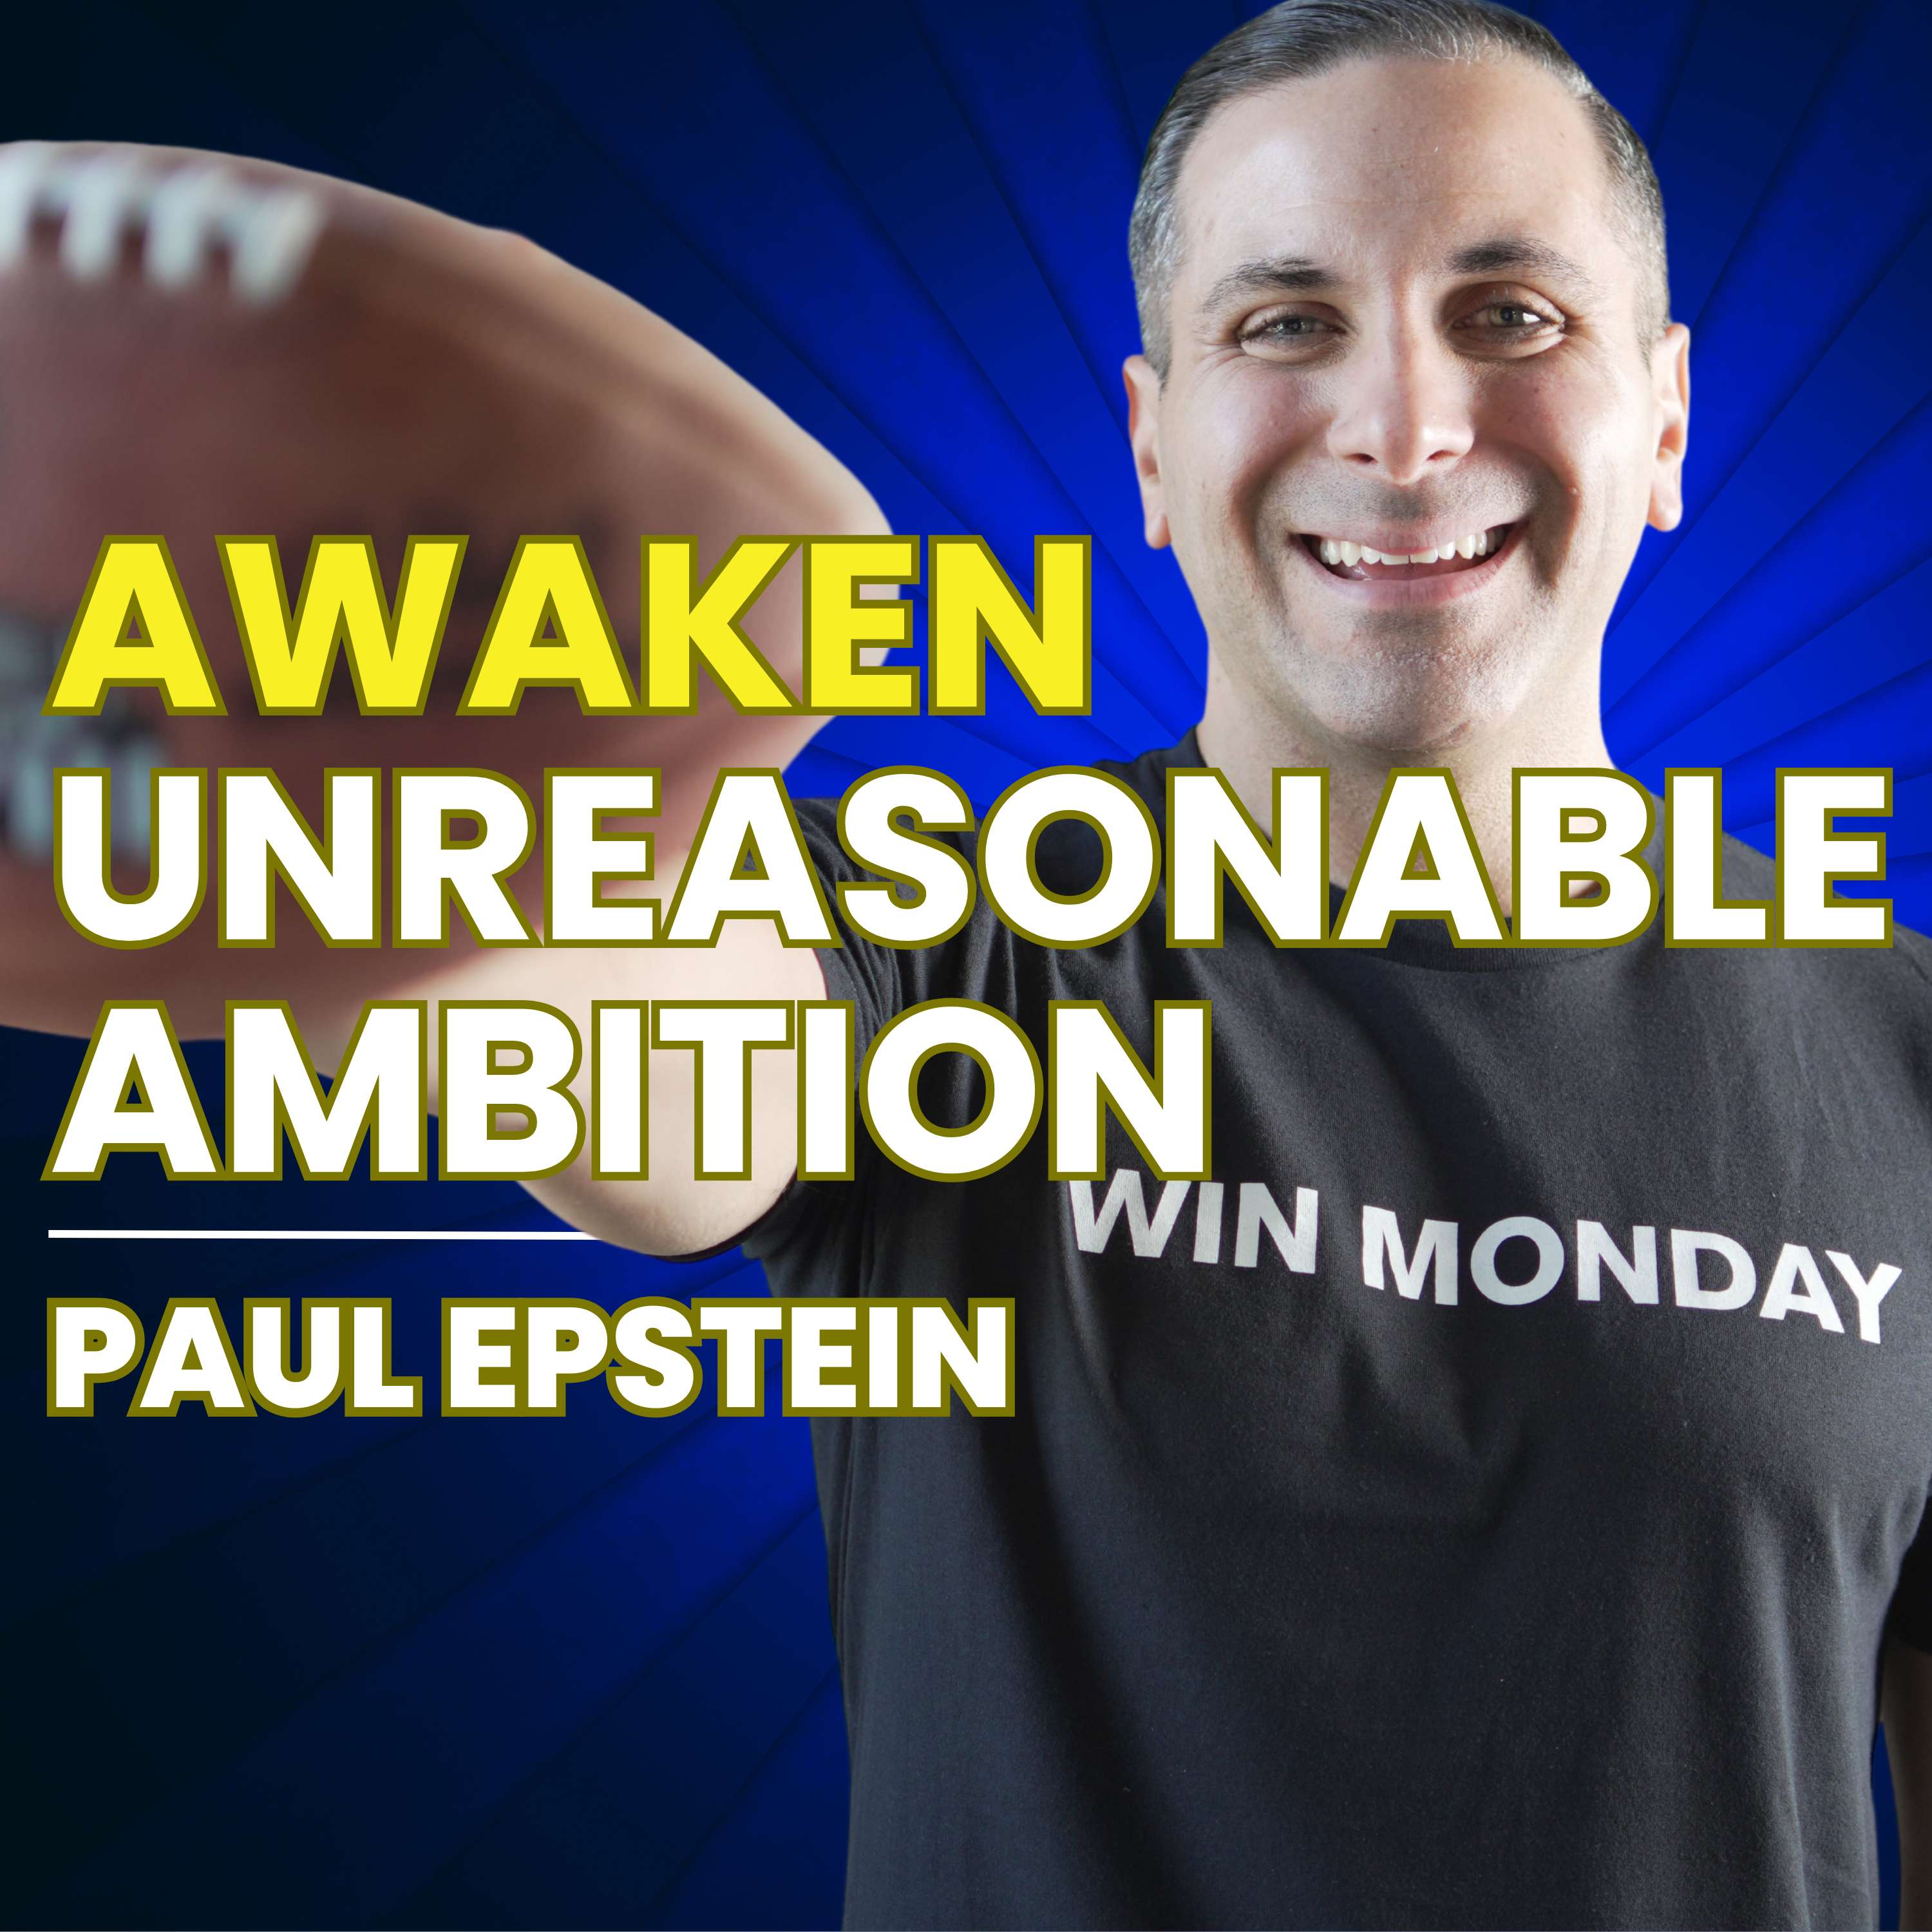 Awaken Unreasonable Ambition with Paul Epstein